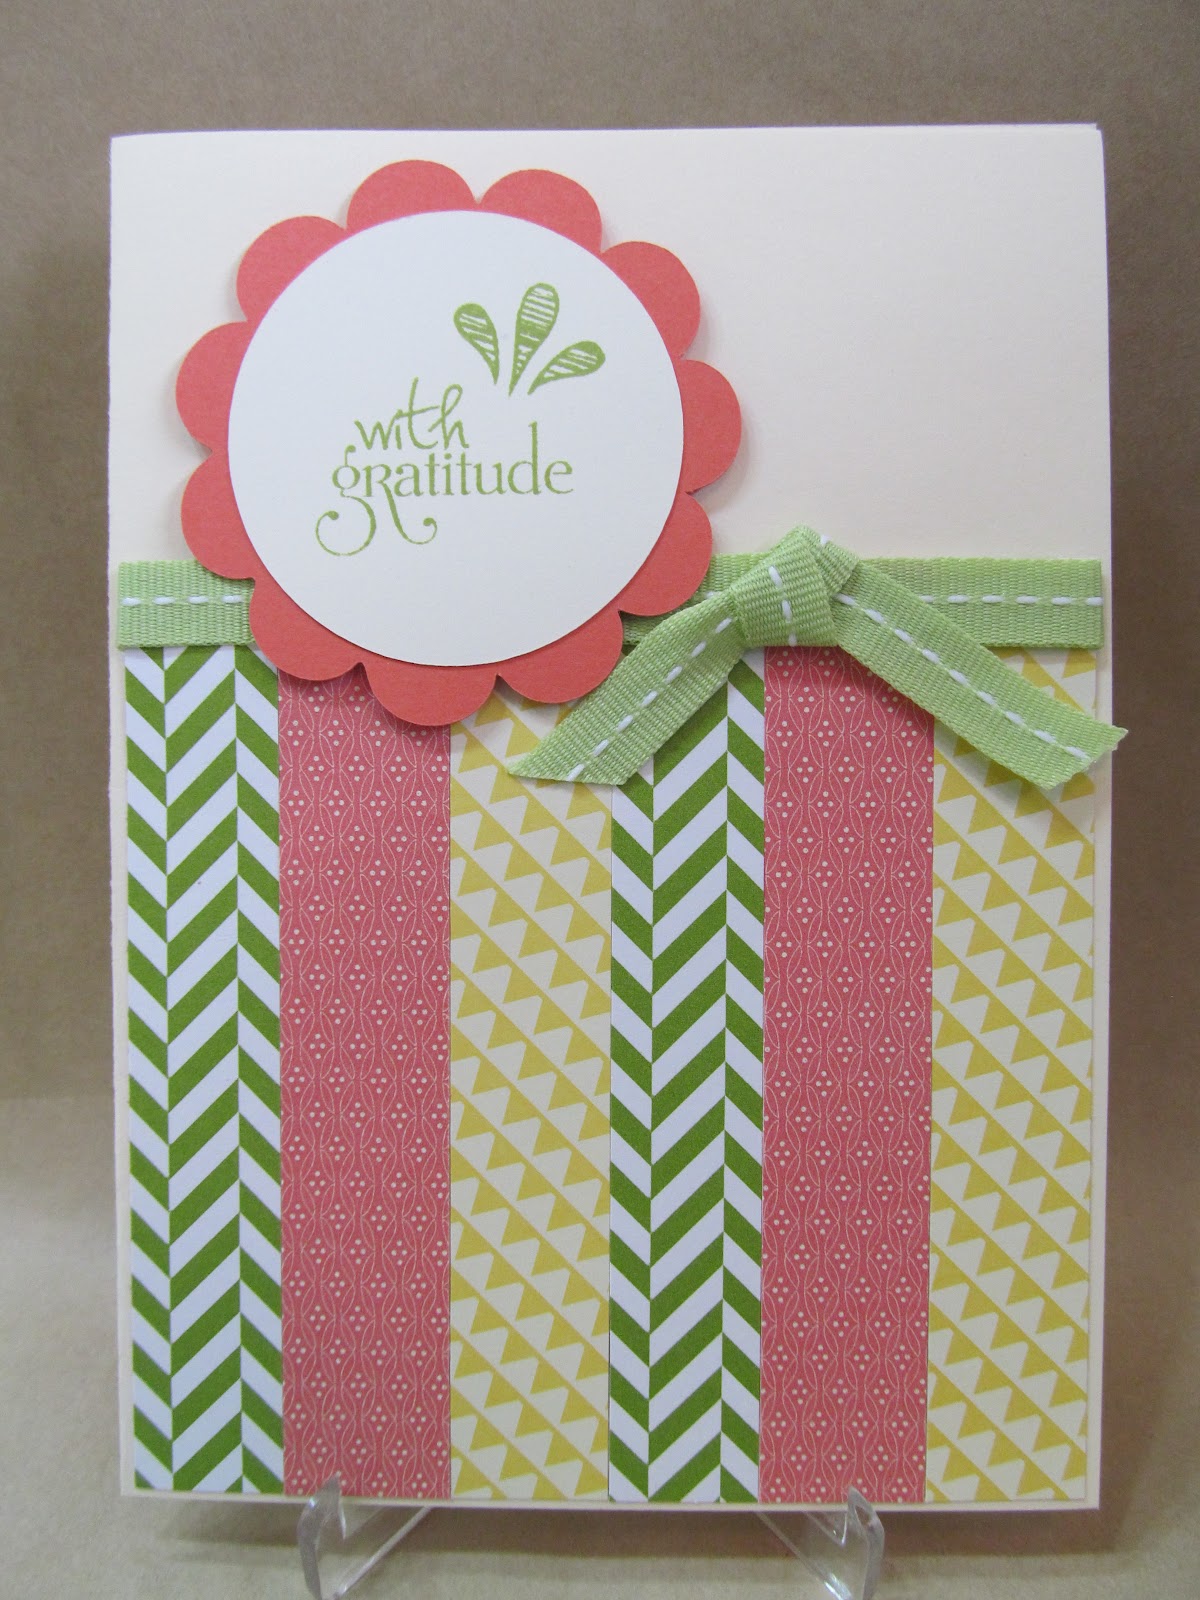 savvy-handmade-cards-with-gratitude-card